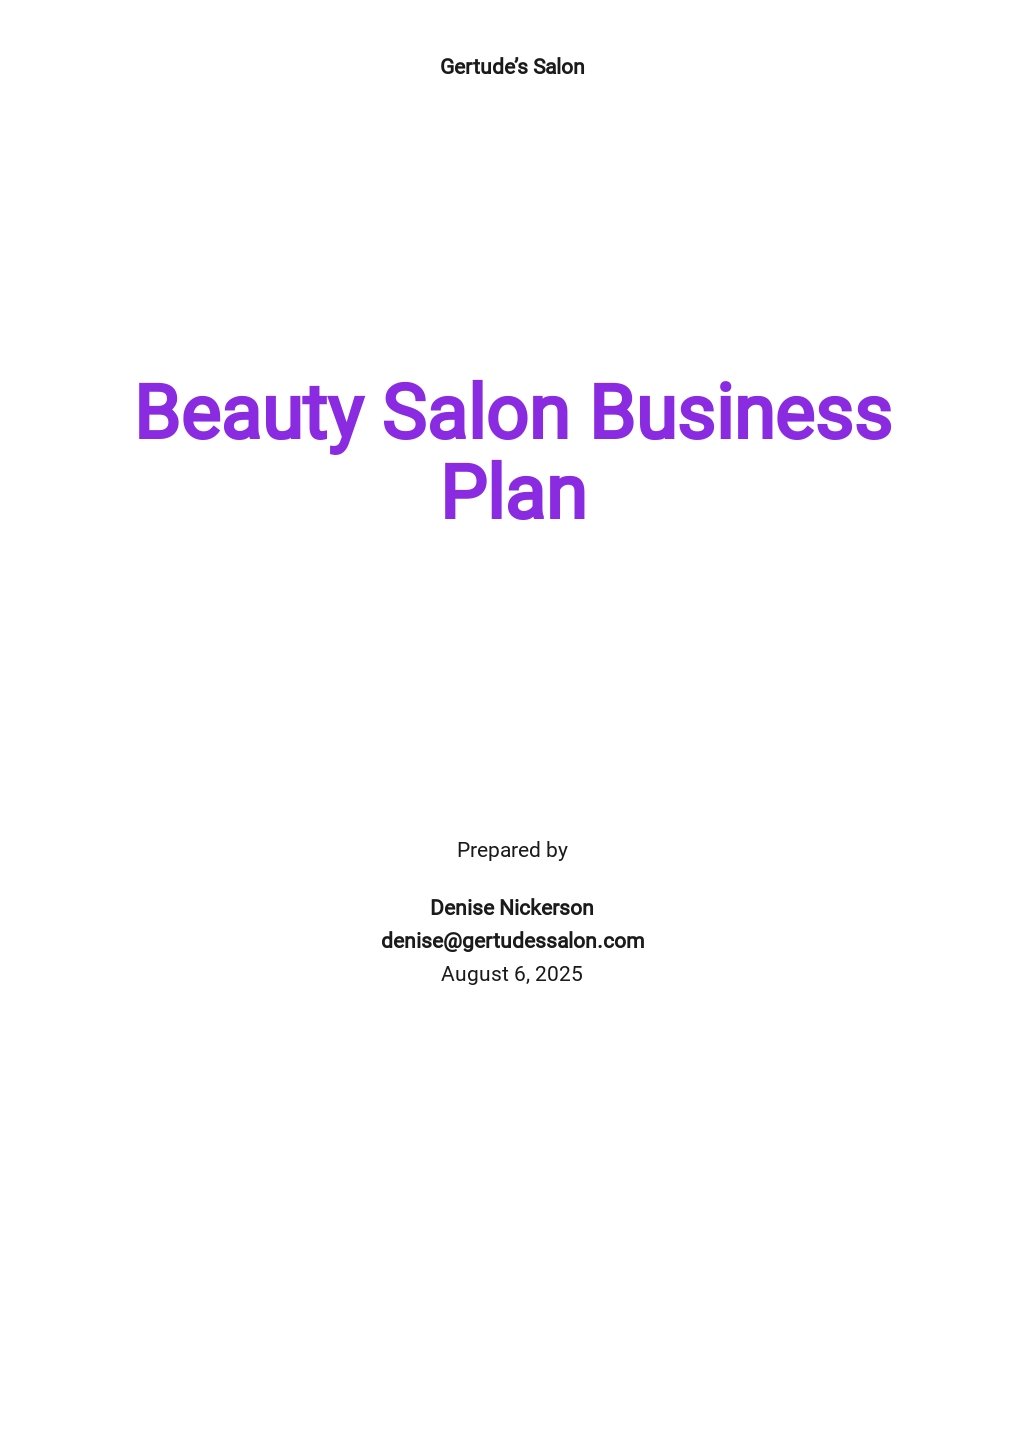 beauty salon business plan template free